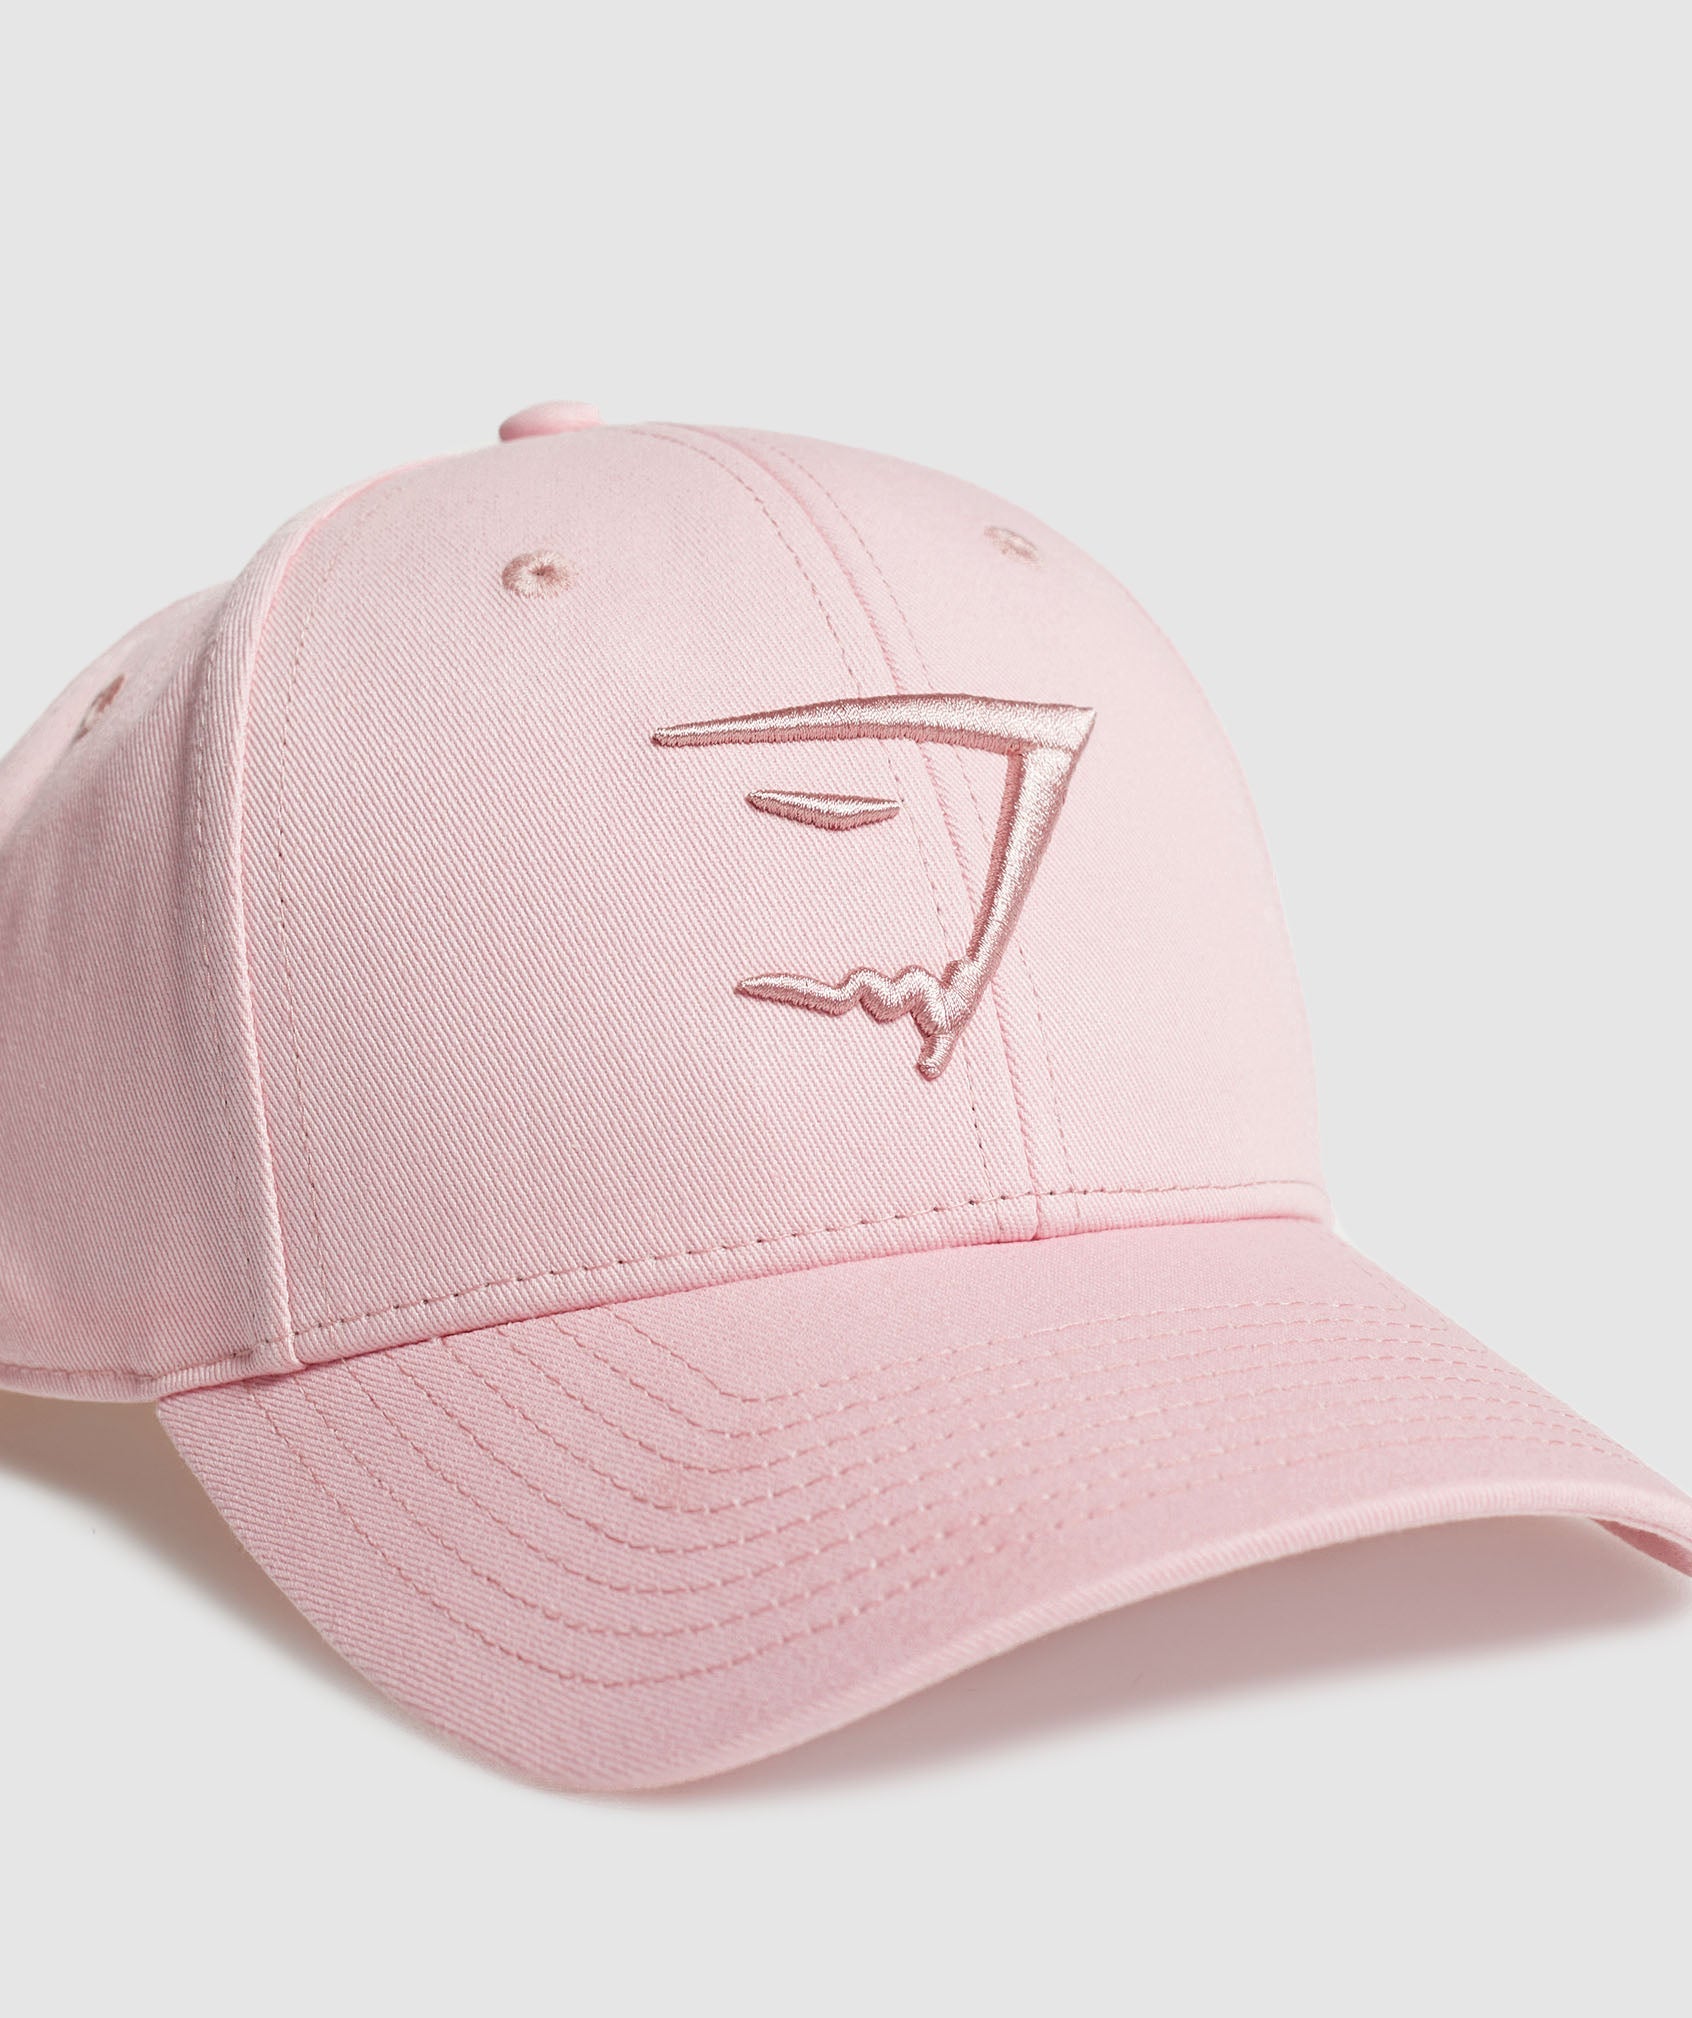 Sharkhead Cap in Light Pink - view 3